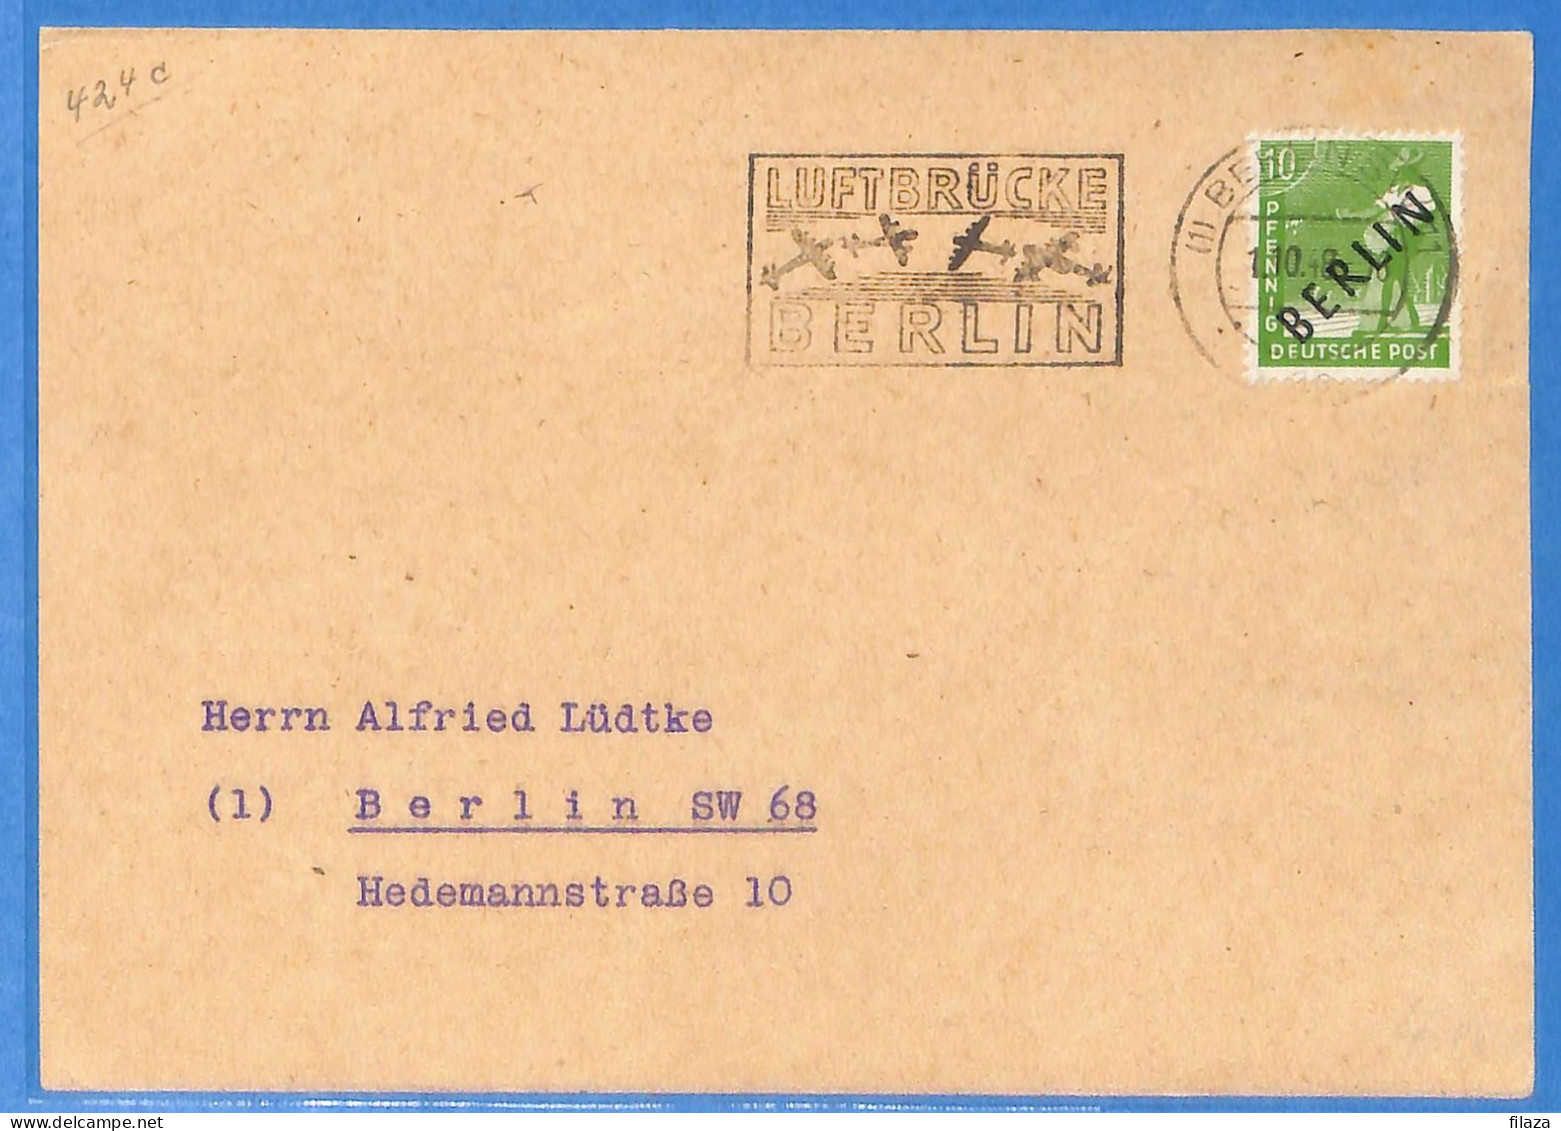 Berlin West 1948 - Carte Postale De Berlin - G33040 - Briefe U. Dokumente